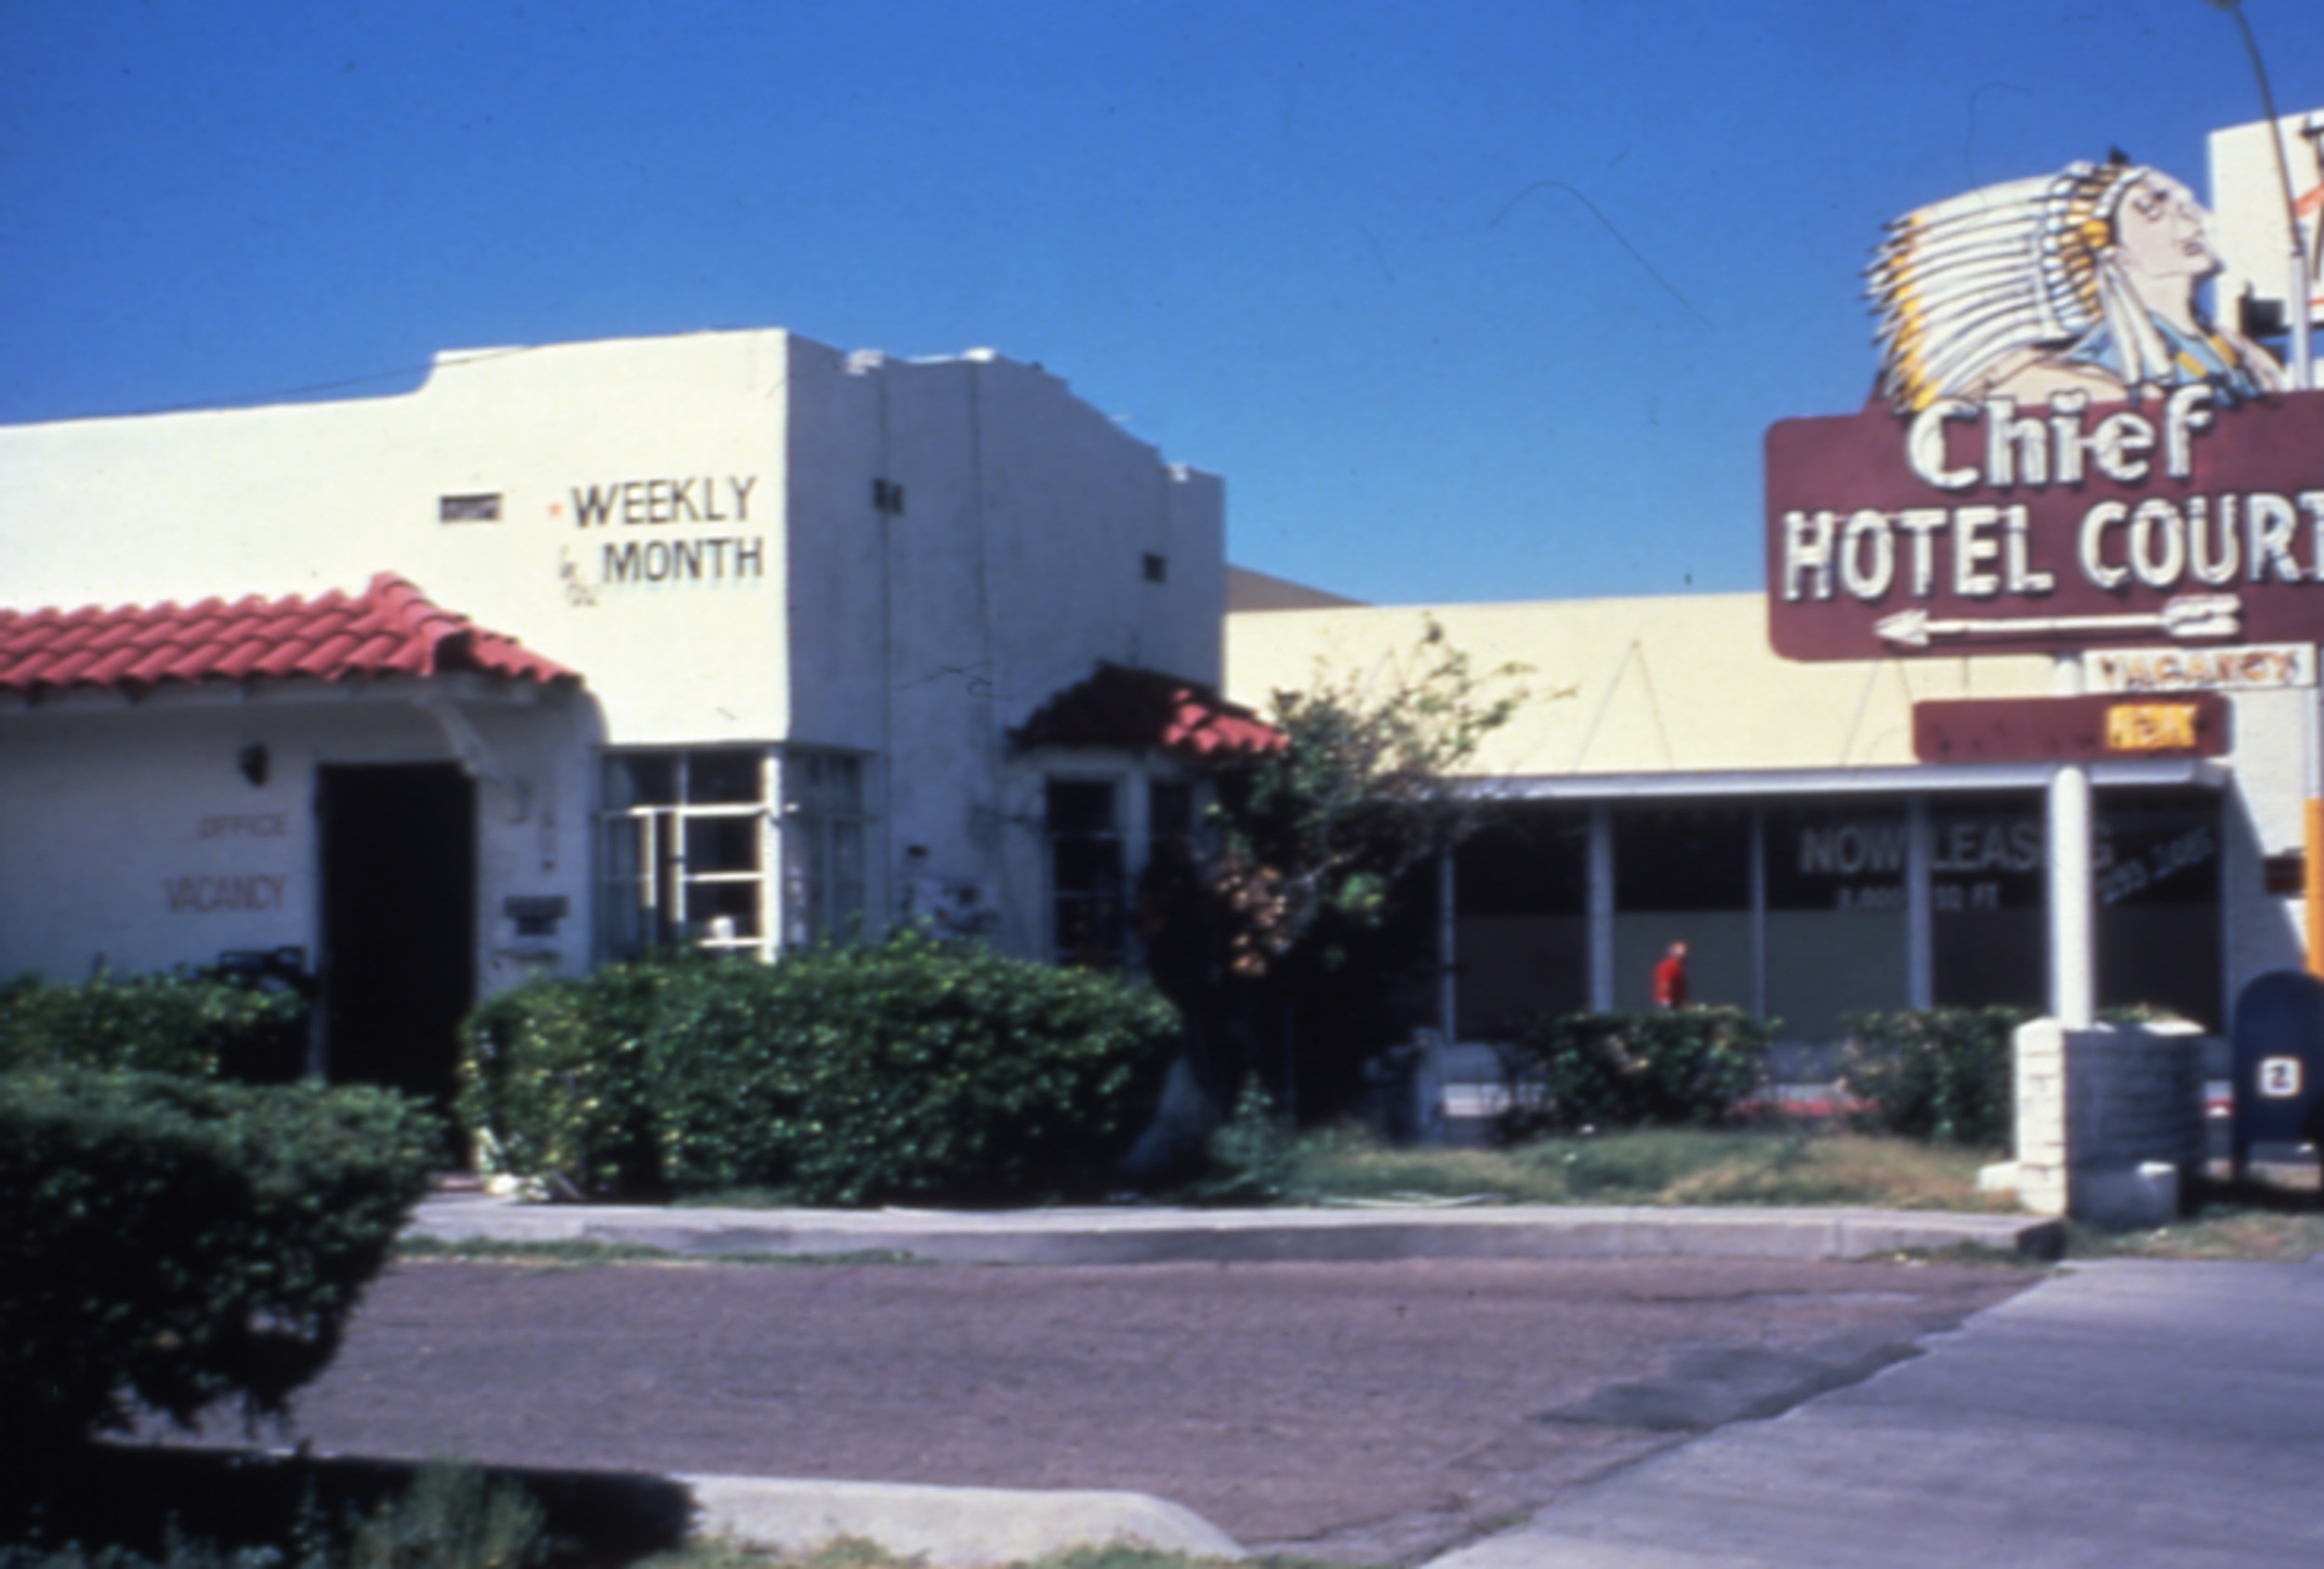 Slide of the Chief Hotel Court, Las Vegas, 1986